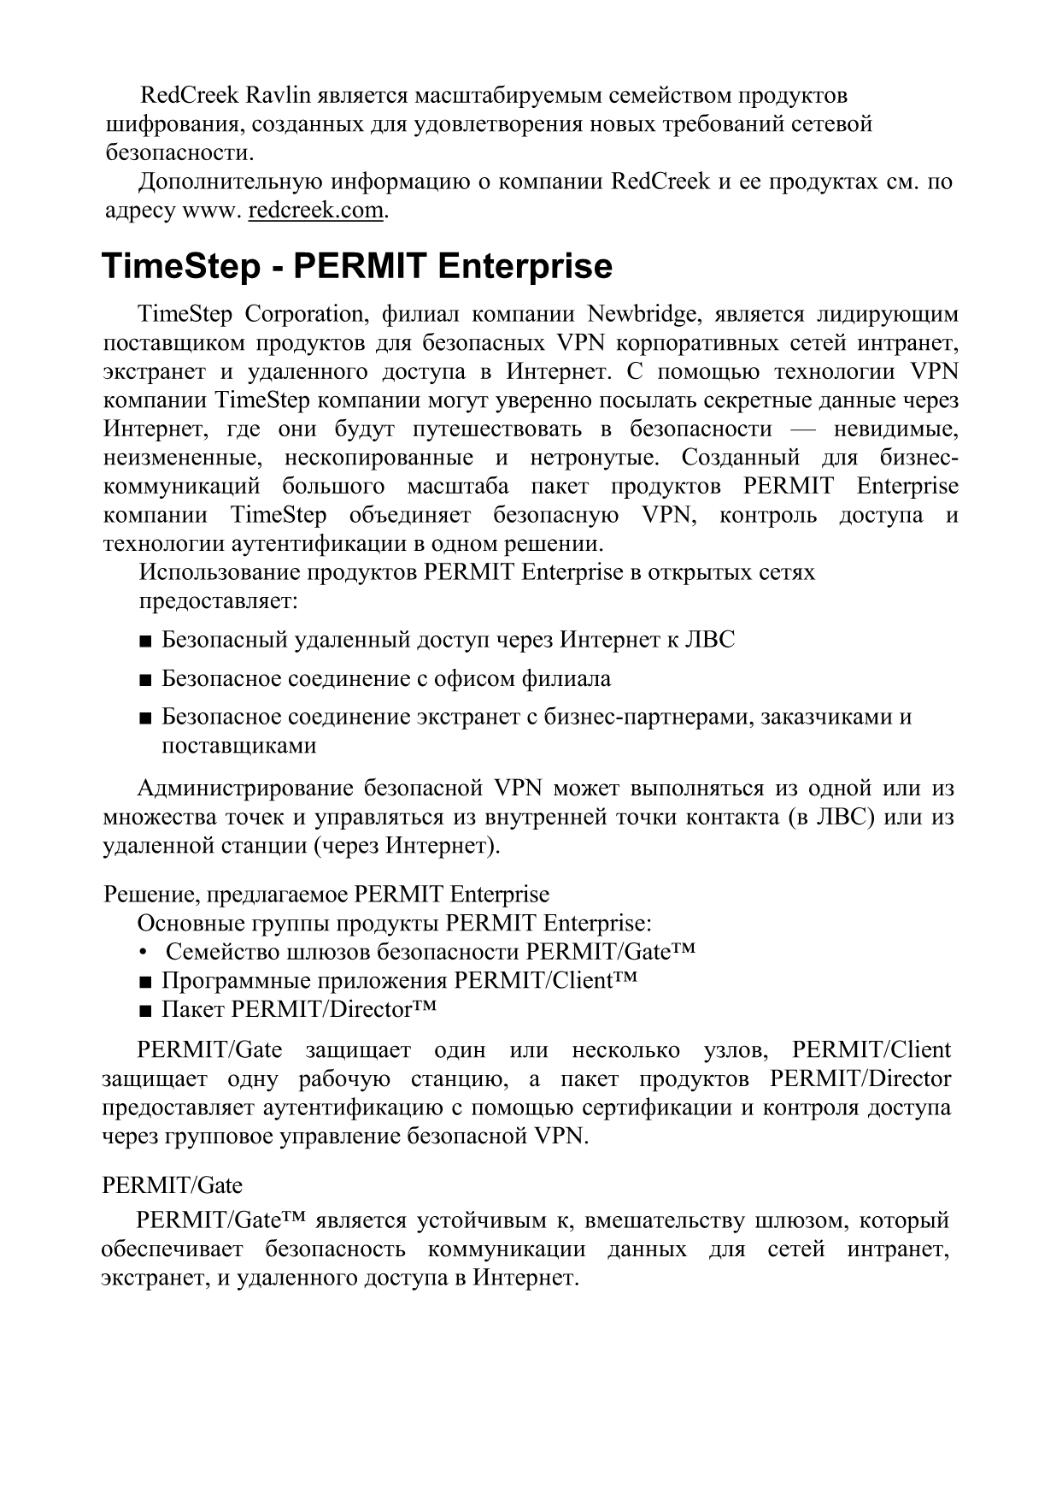 TimeStep - PERMIT Enterprise